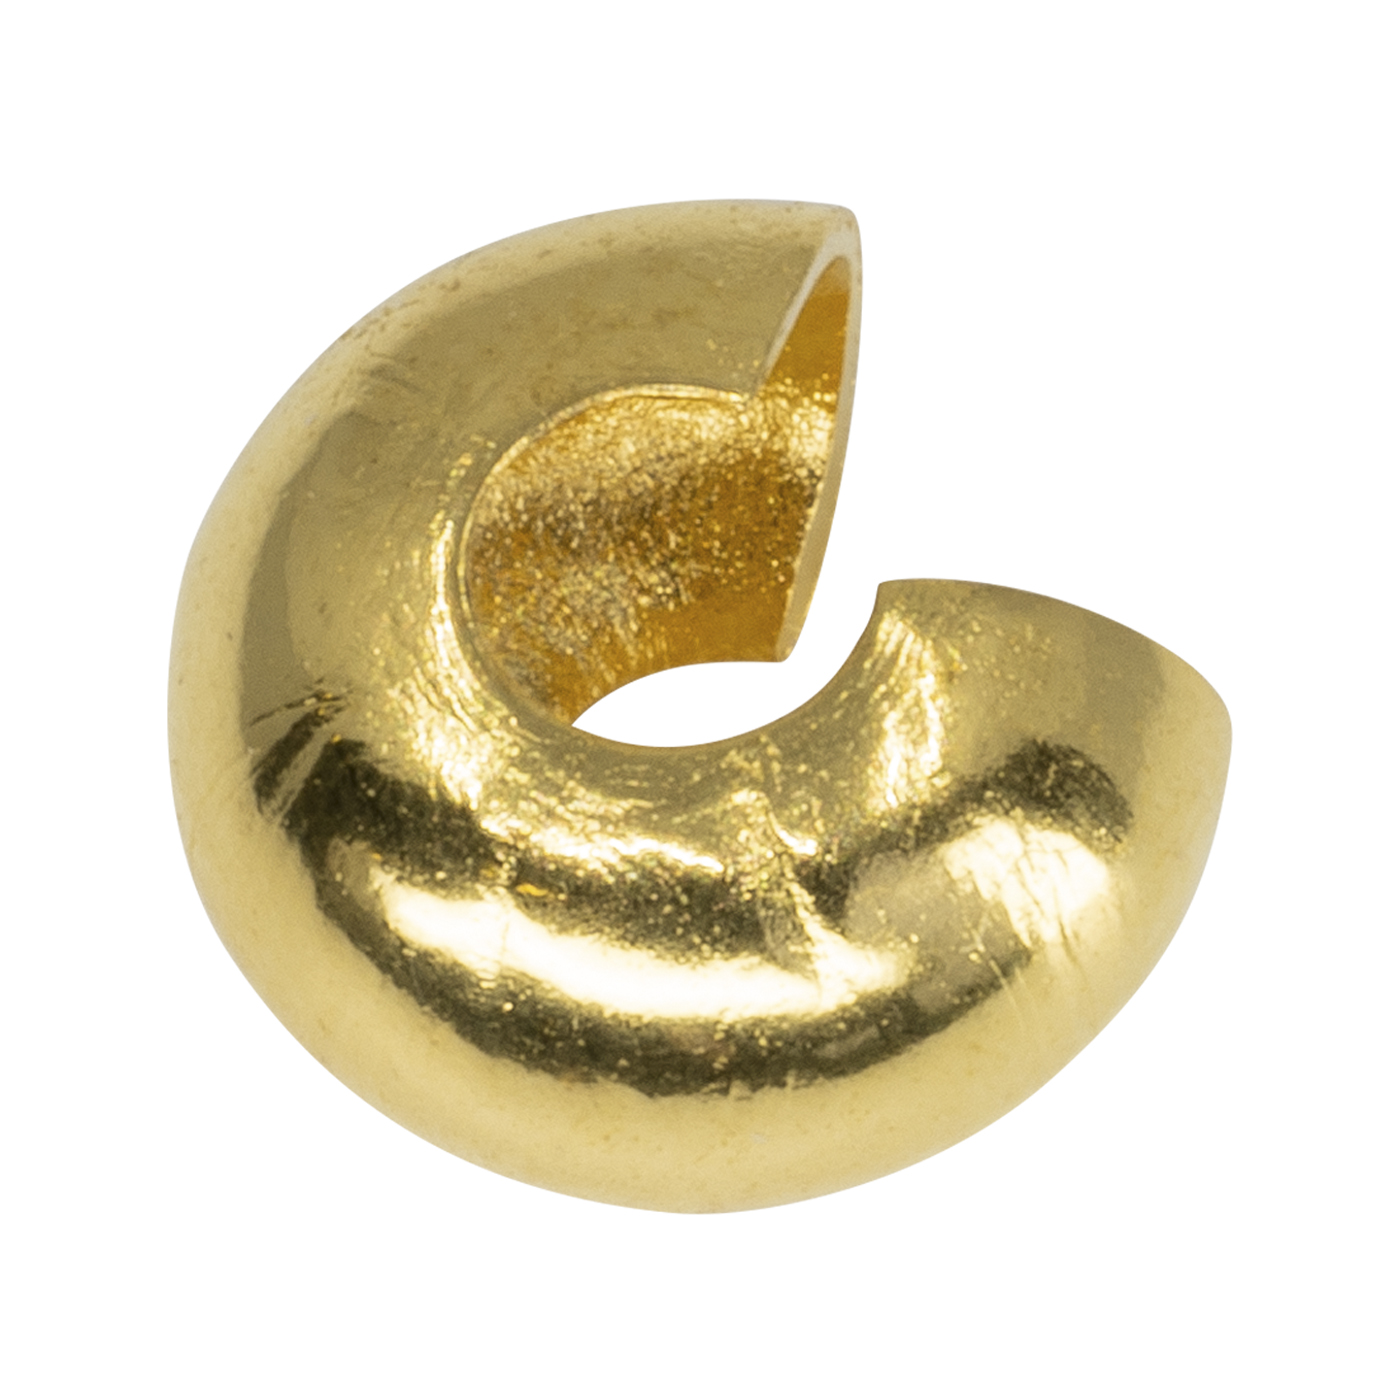 Kaschierperlen, Metall, goldfarben, Außen-ø 6 mm - 50 Stück